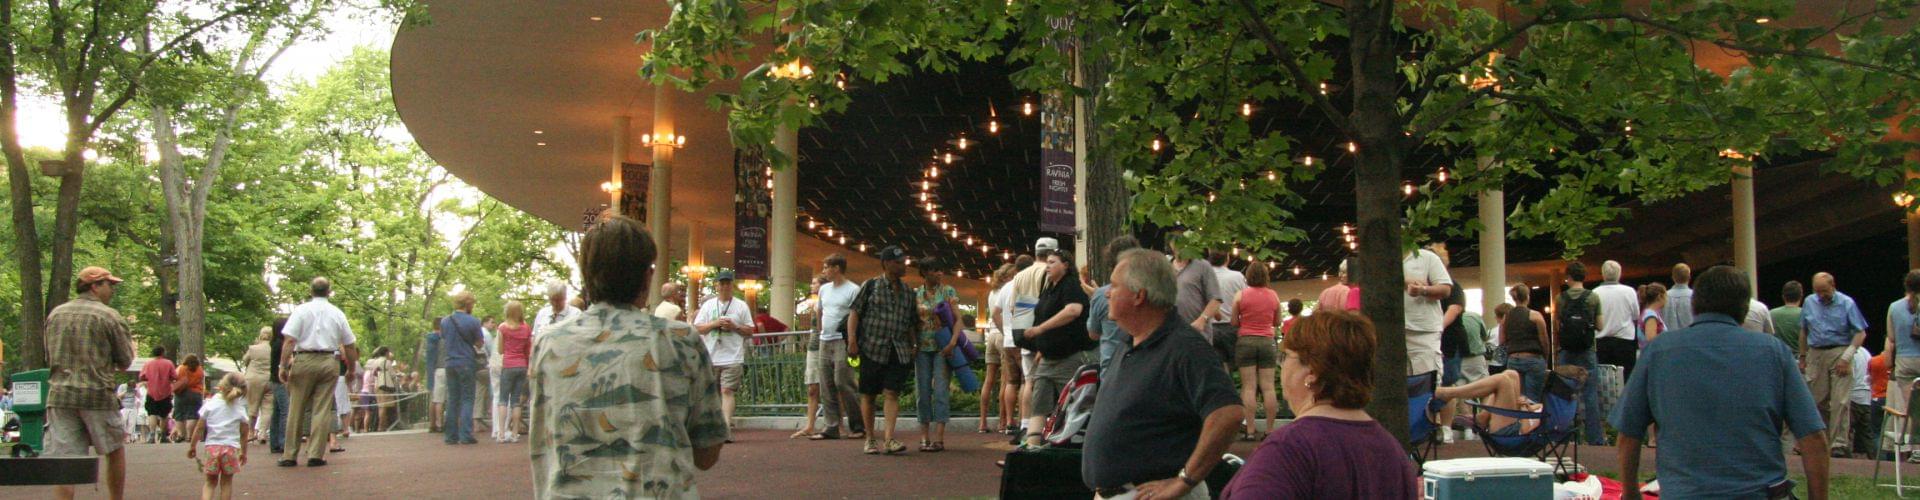 Ravinia Festival Park Chicago Reviews ellgeeBE